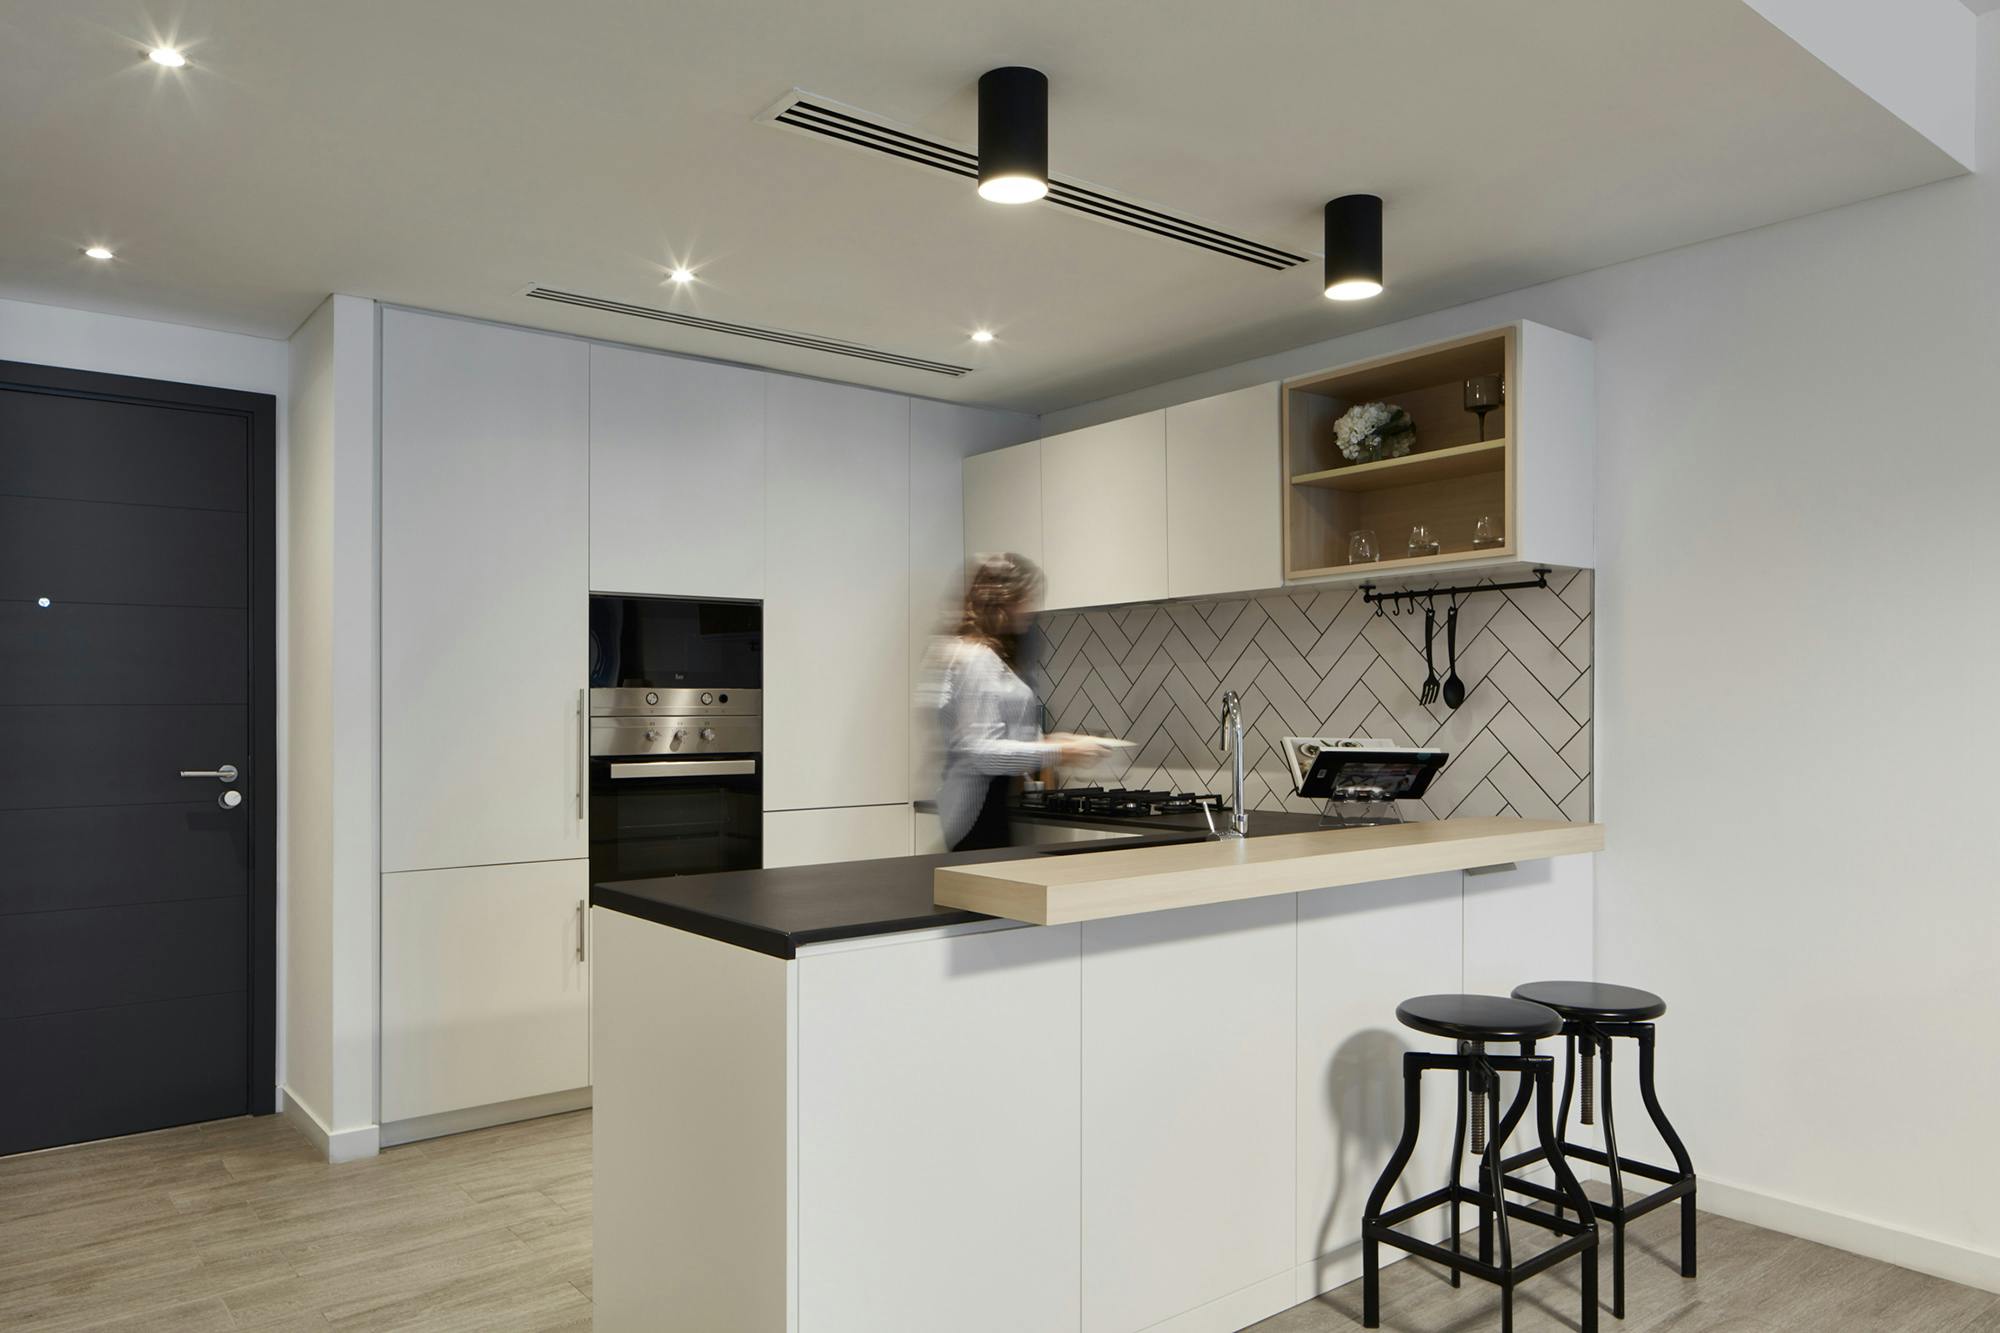 Číslo obrázku 34 aktuální sekce Dekton Sirius adds a welcoming touch to the kitchens of a residential development in Dubai Cosentino Česká Republika